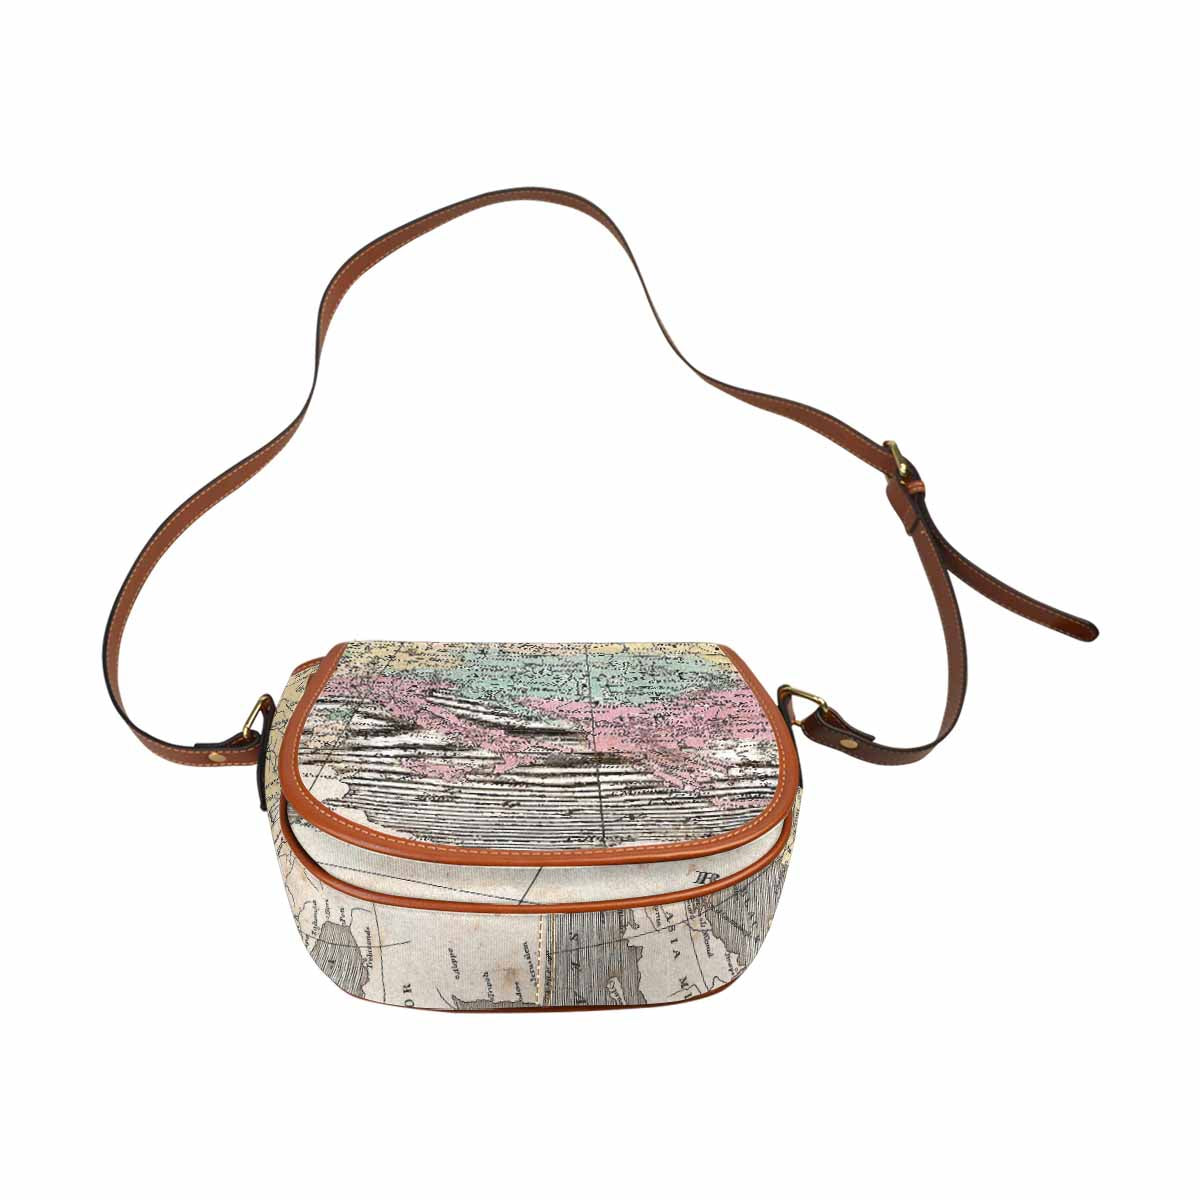 Antique Map design Handbag, saddle bag, Design 9